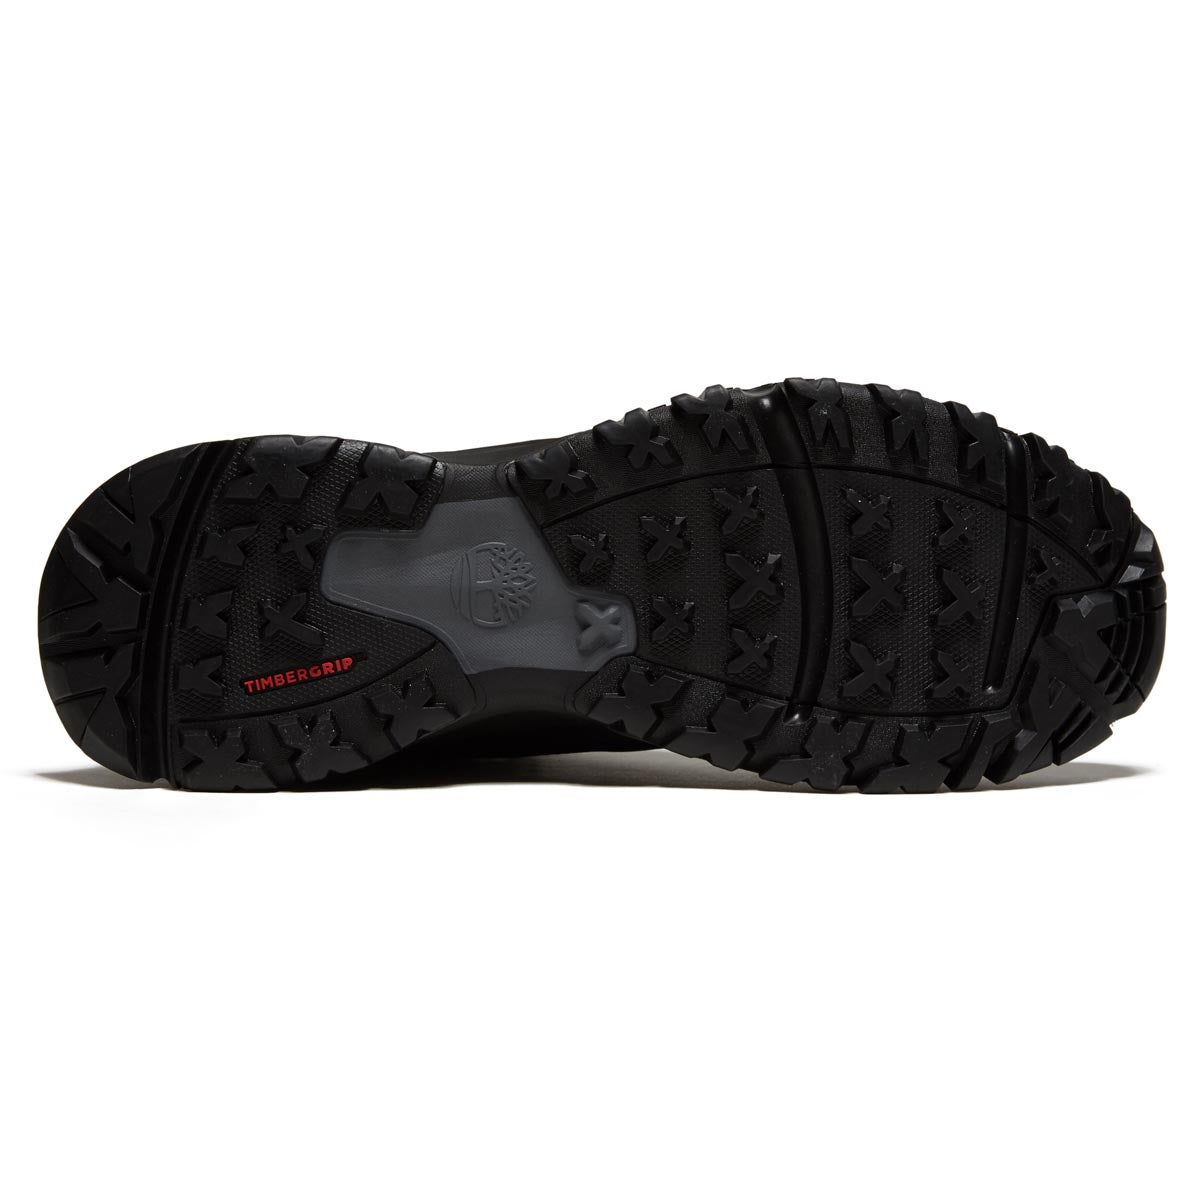 Timberland Motion Scramble Mid Lace Up Wp Shoes - Black Nubuck image 4